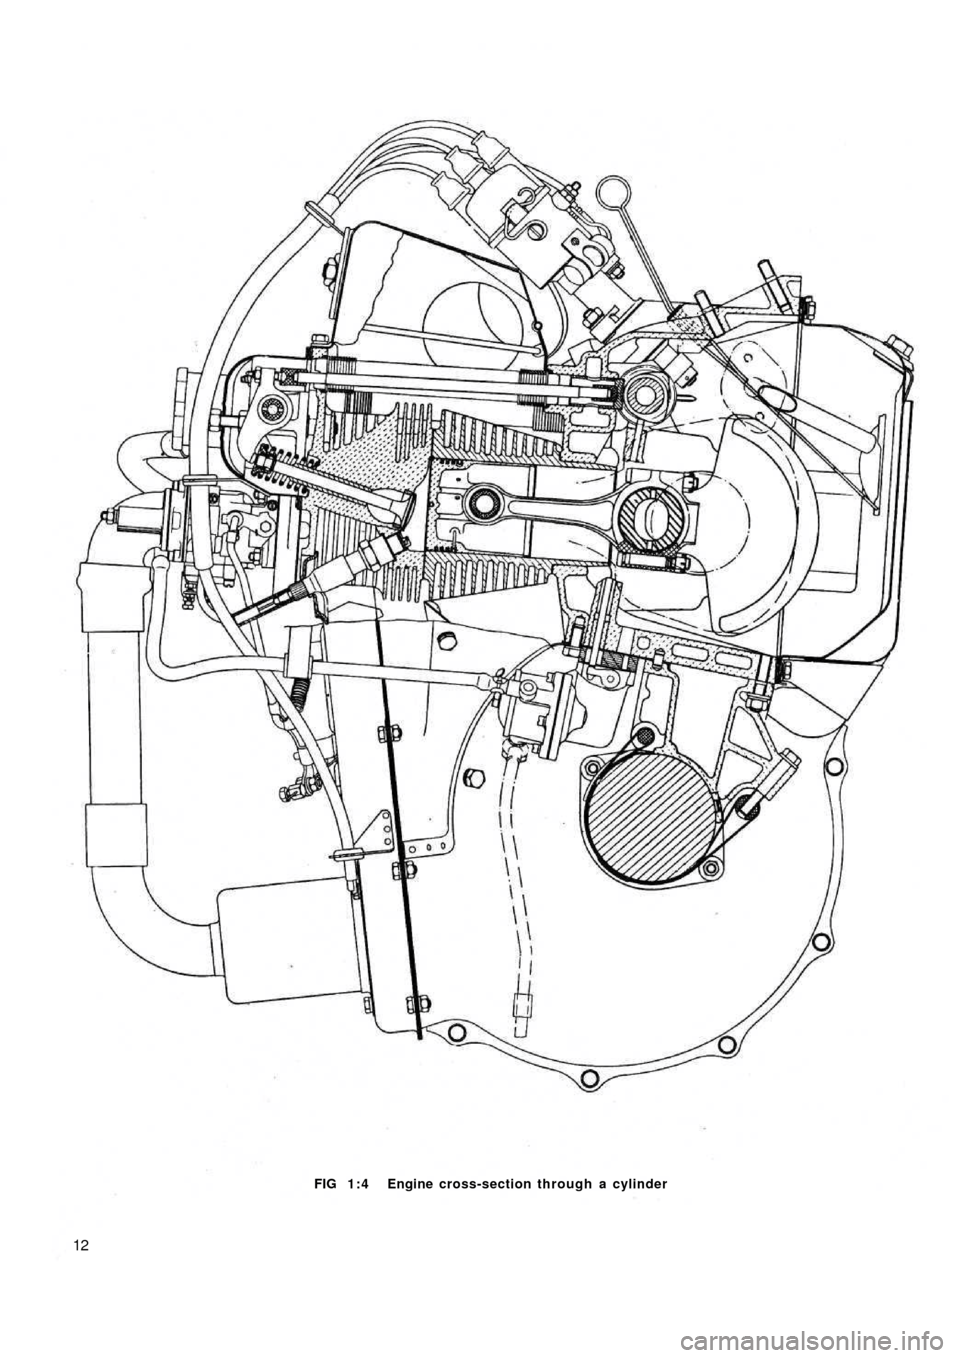 FIAT 500 1957 1.G Workshop Manual FIG 1 : 4  Engine cross-section through a cylinder
12 